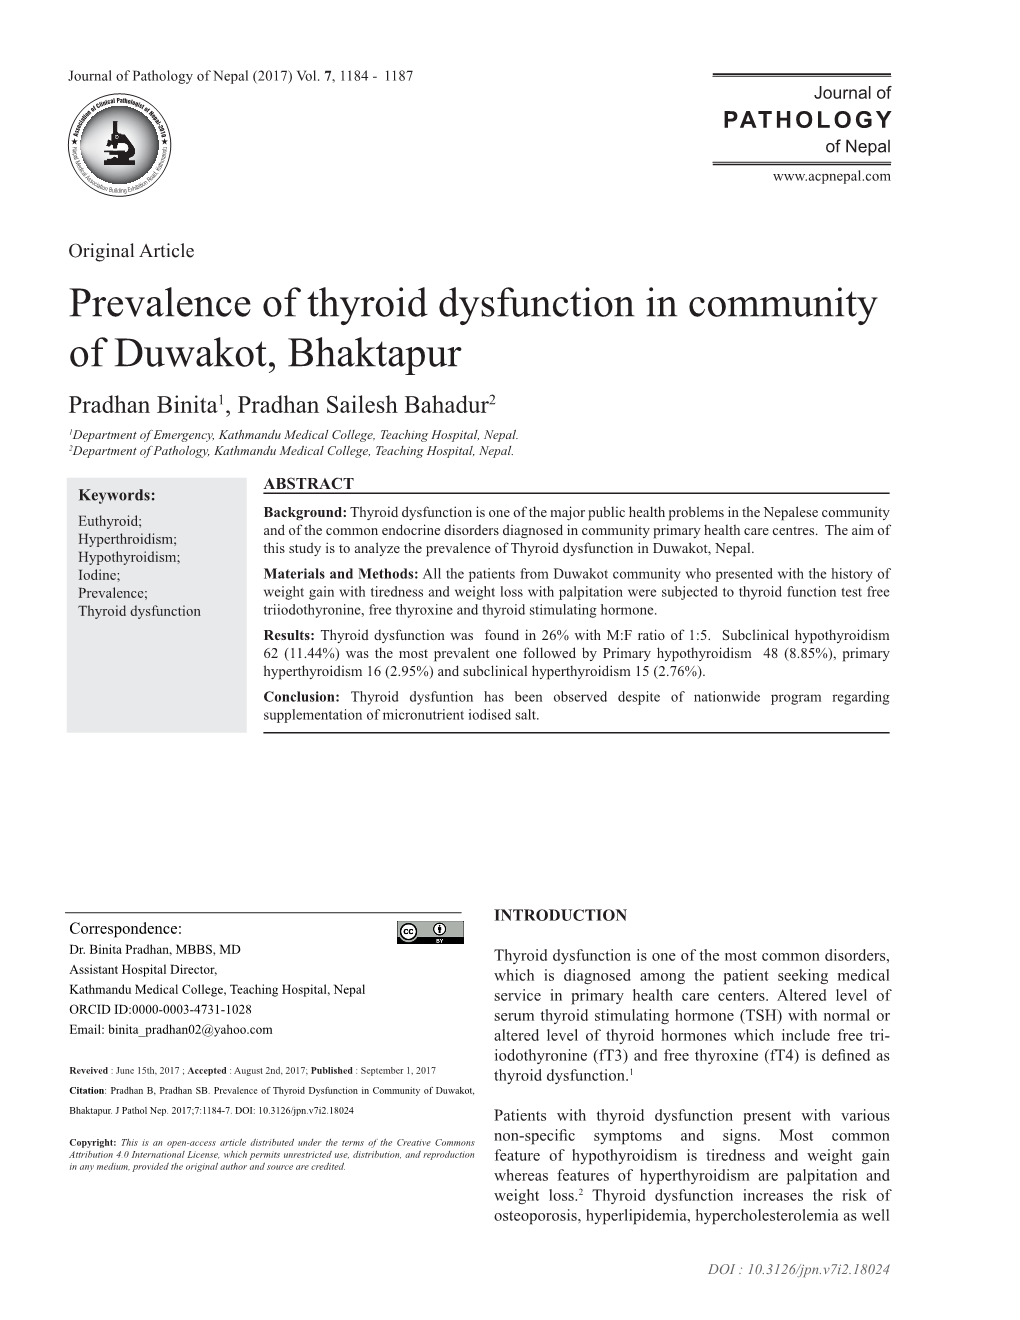 Prevalence of Thyroid Dysfunction in Community of Duwakot, Bhaktapur